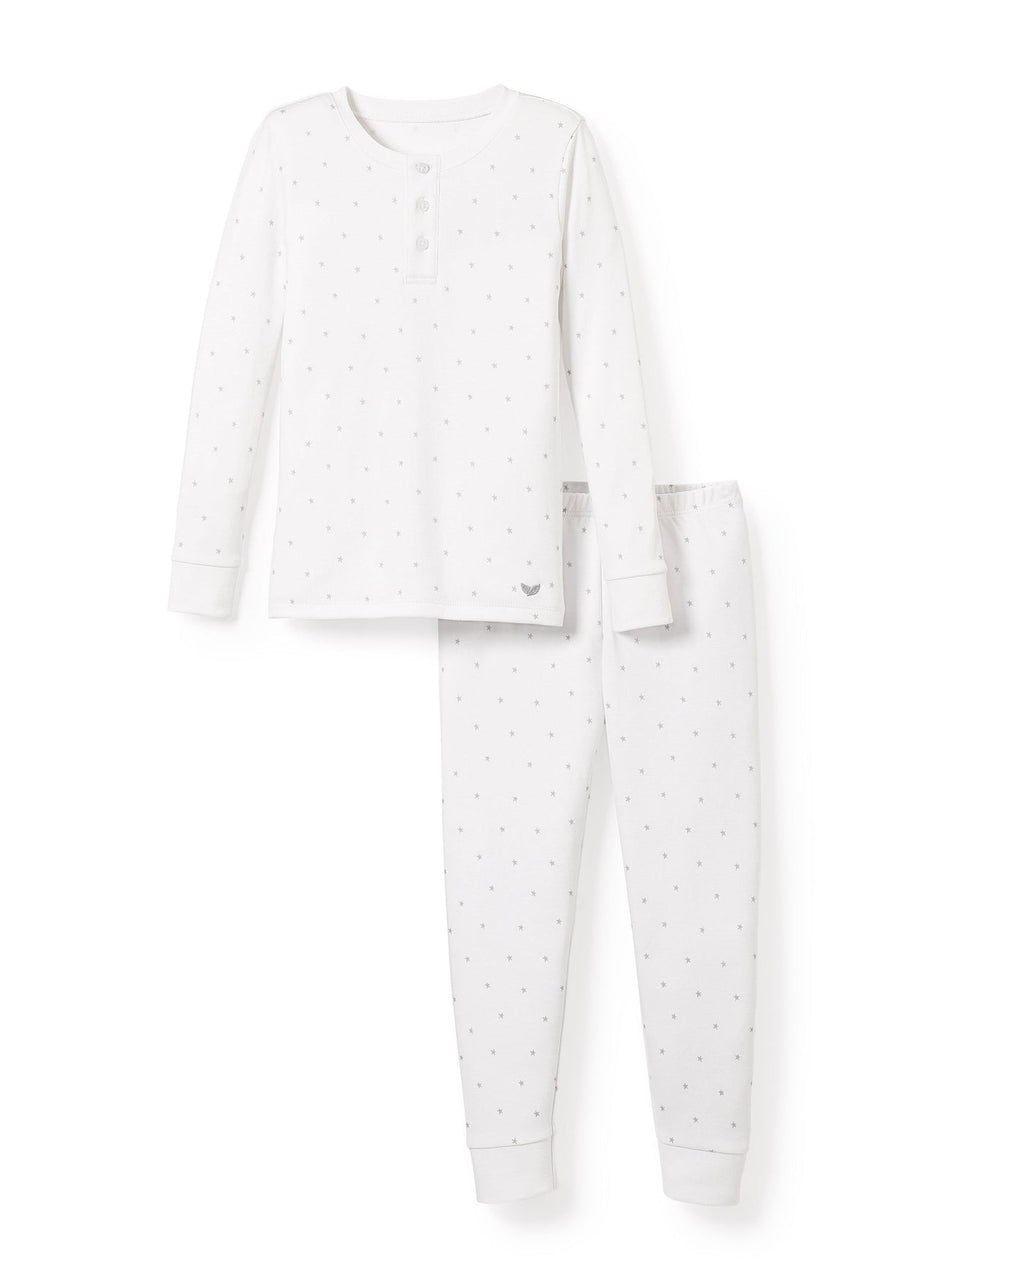 Petite Plume Tight Fit Pajamas in Grey Stars